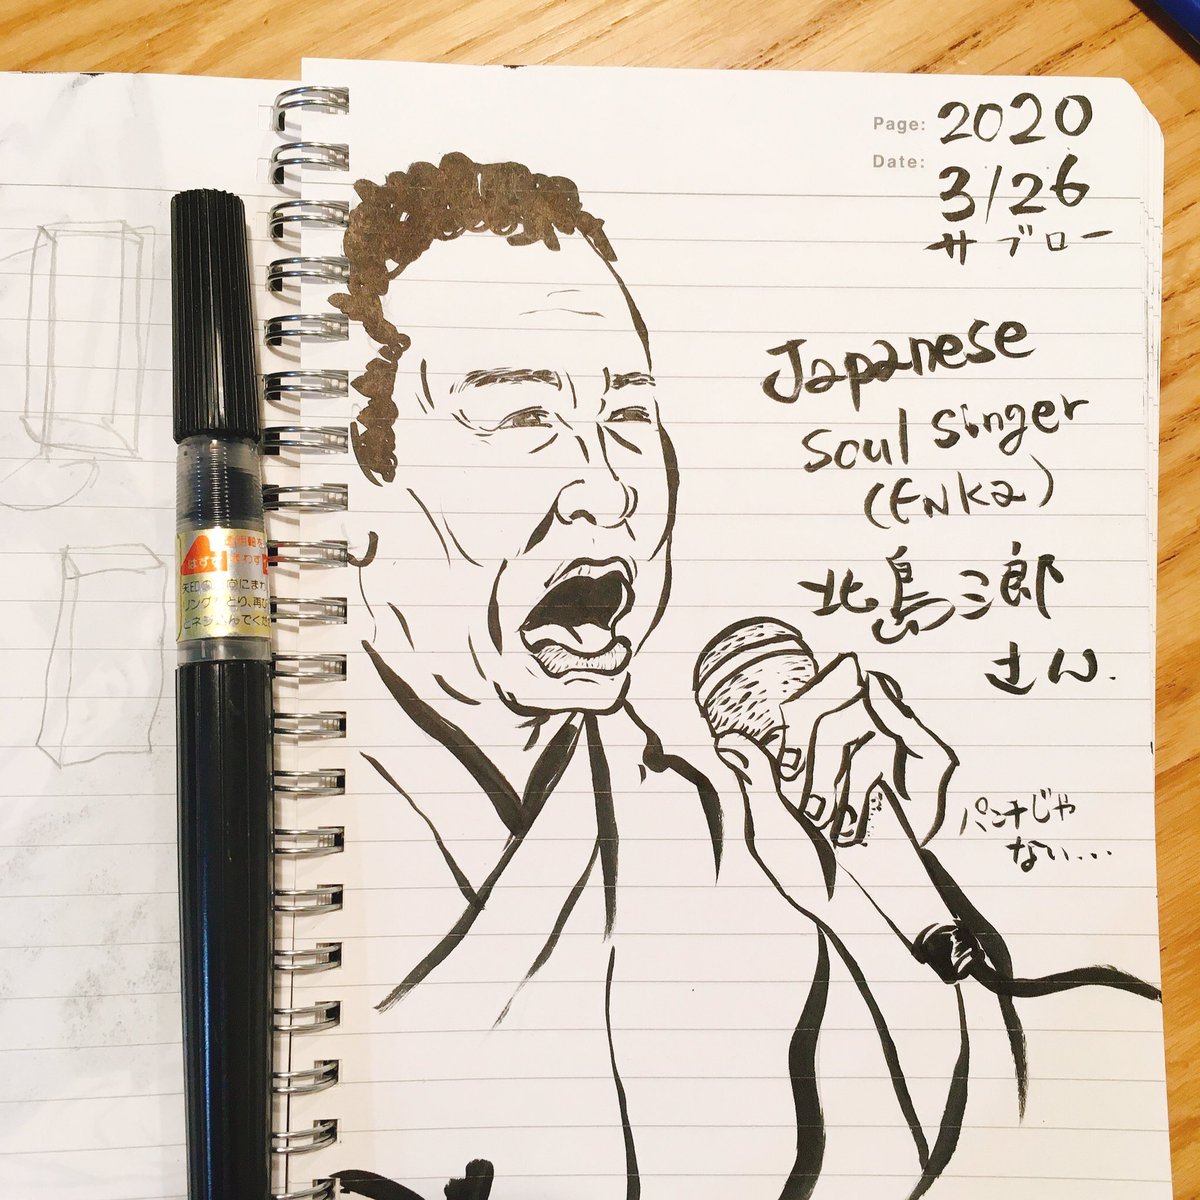 Imo Mugi Goma This Is Saburo Kitajima Enka Singer Enka Is Japanese Soul Music Portrait Illustration Drawing サブロー 3 26 の日ということで 北島三郎さんを パンチのイメージでしたが あれは木梨憲武さん由来なのかもね 似顔絵